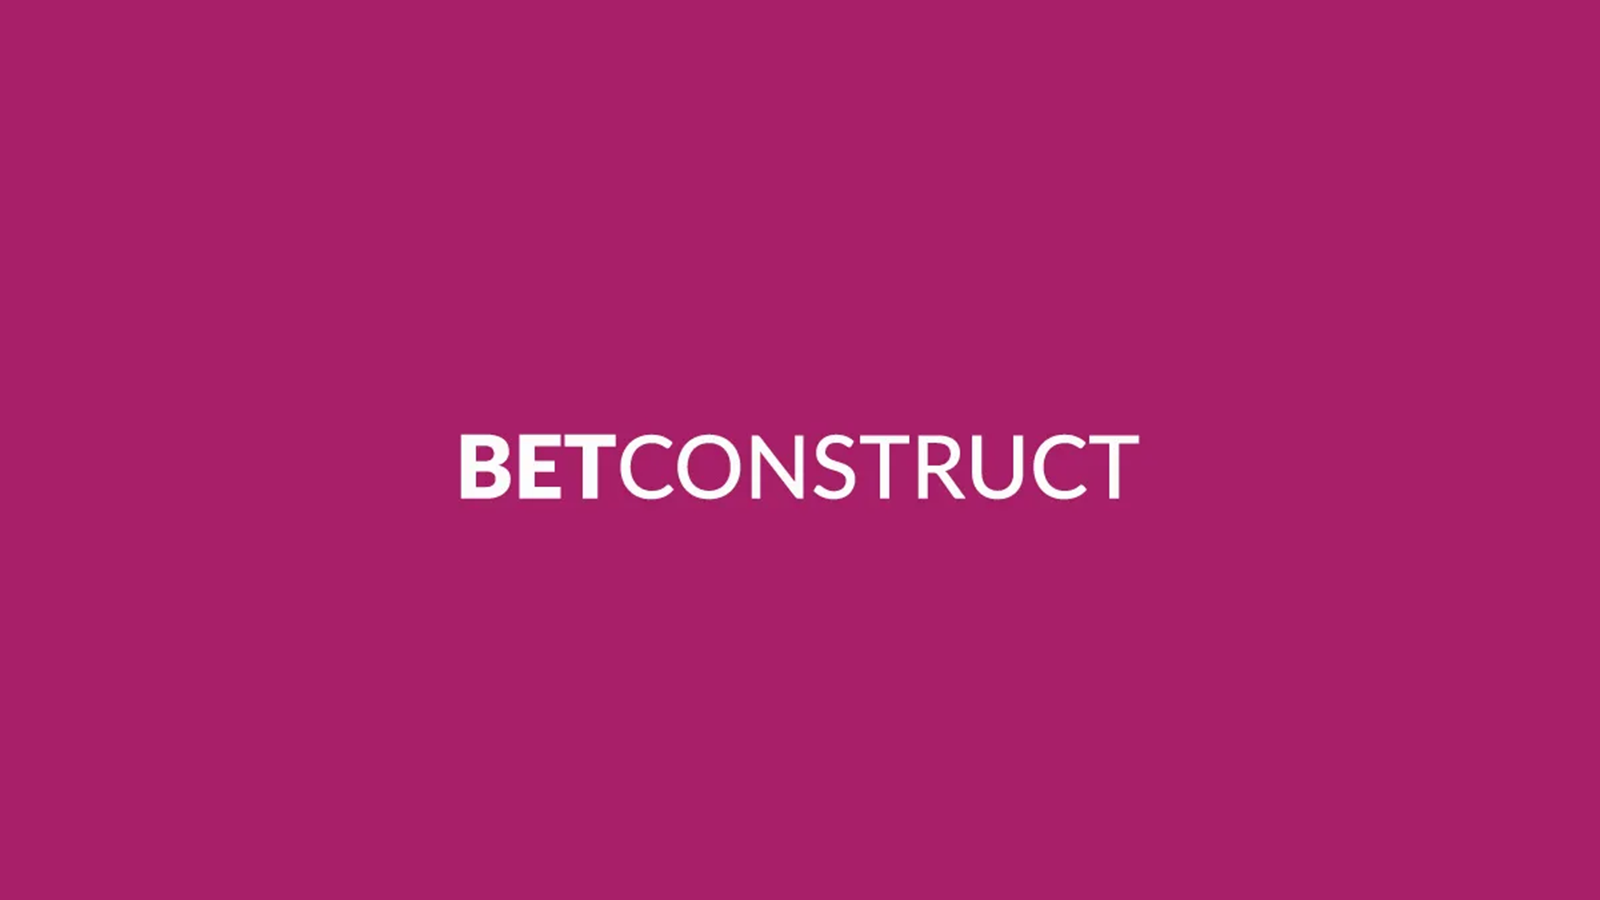 BetConstruct's Innovative OTT Platform